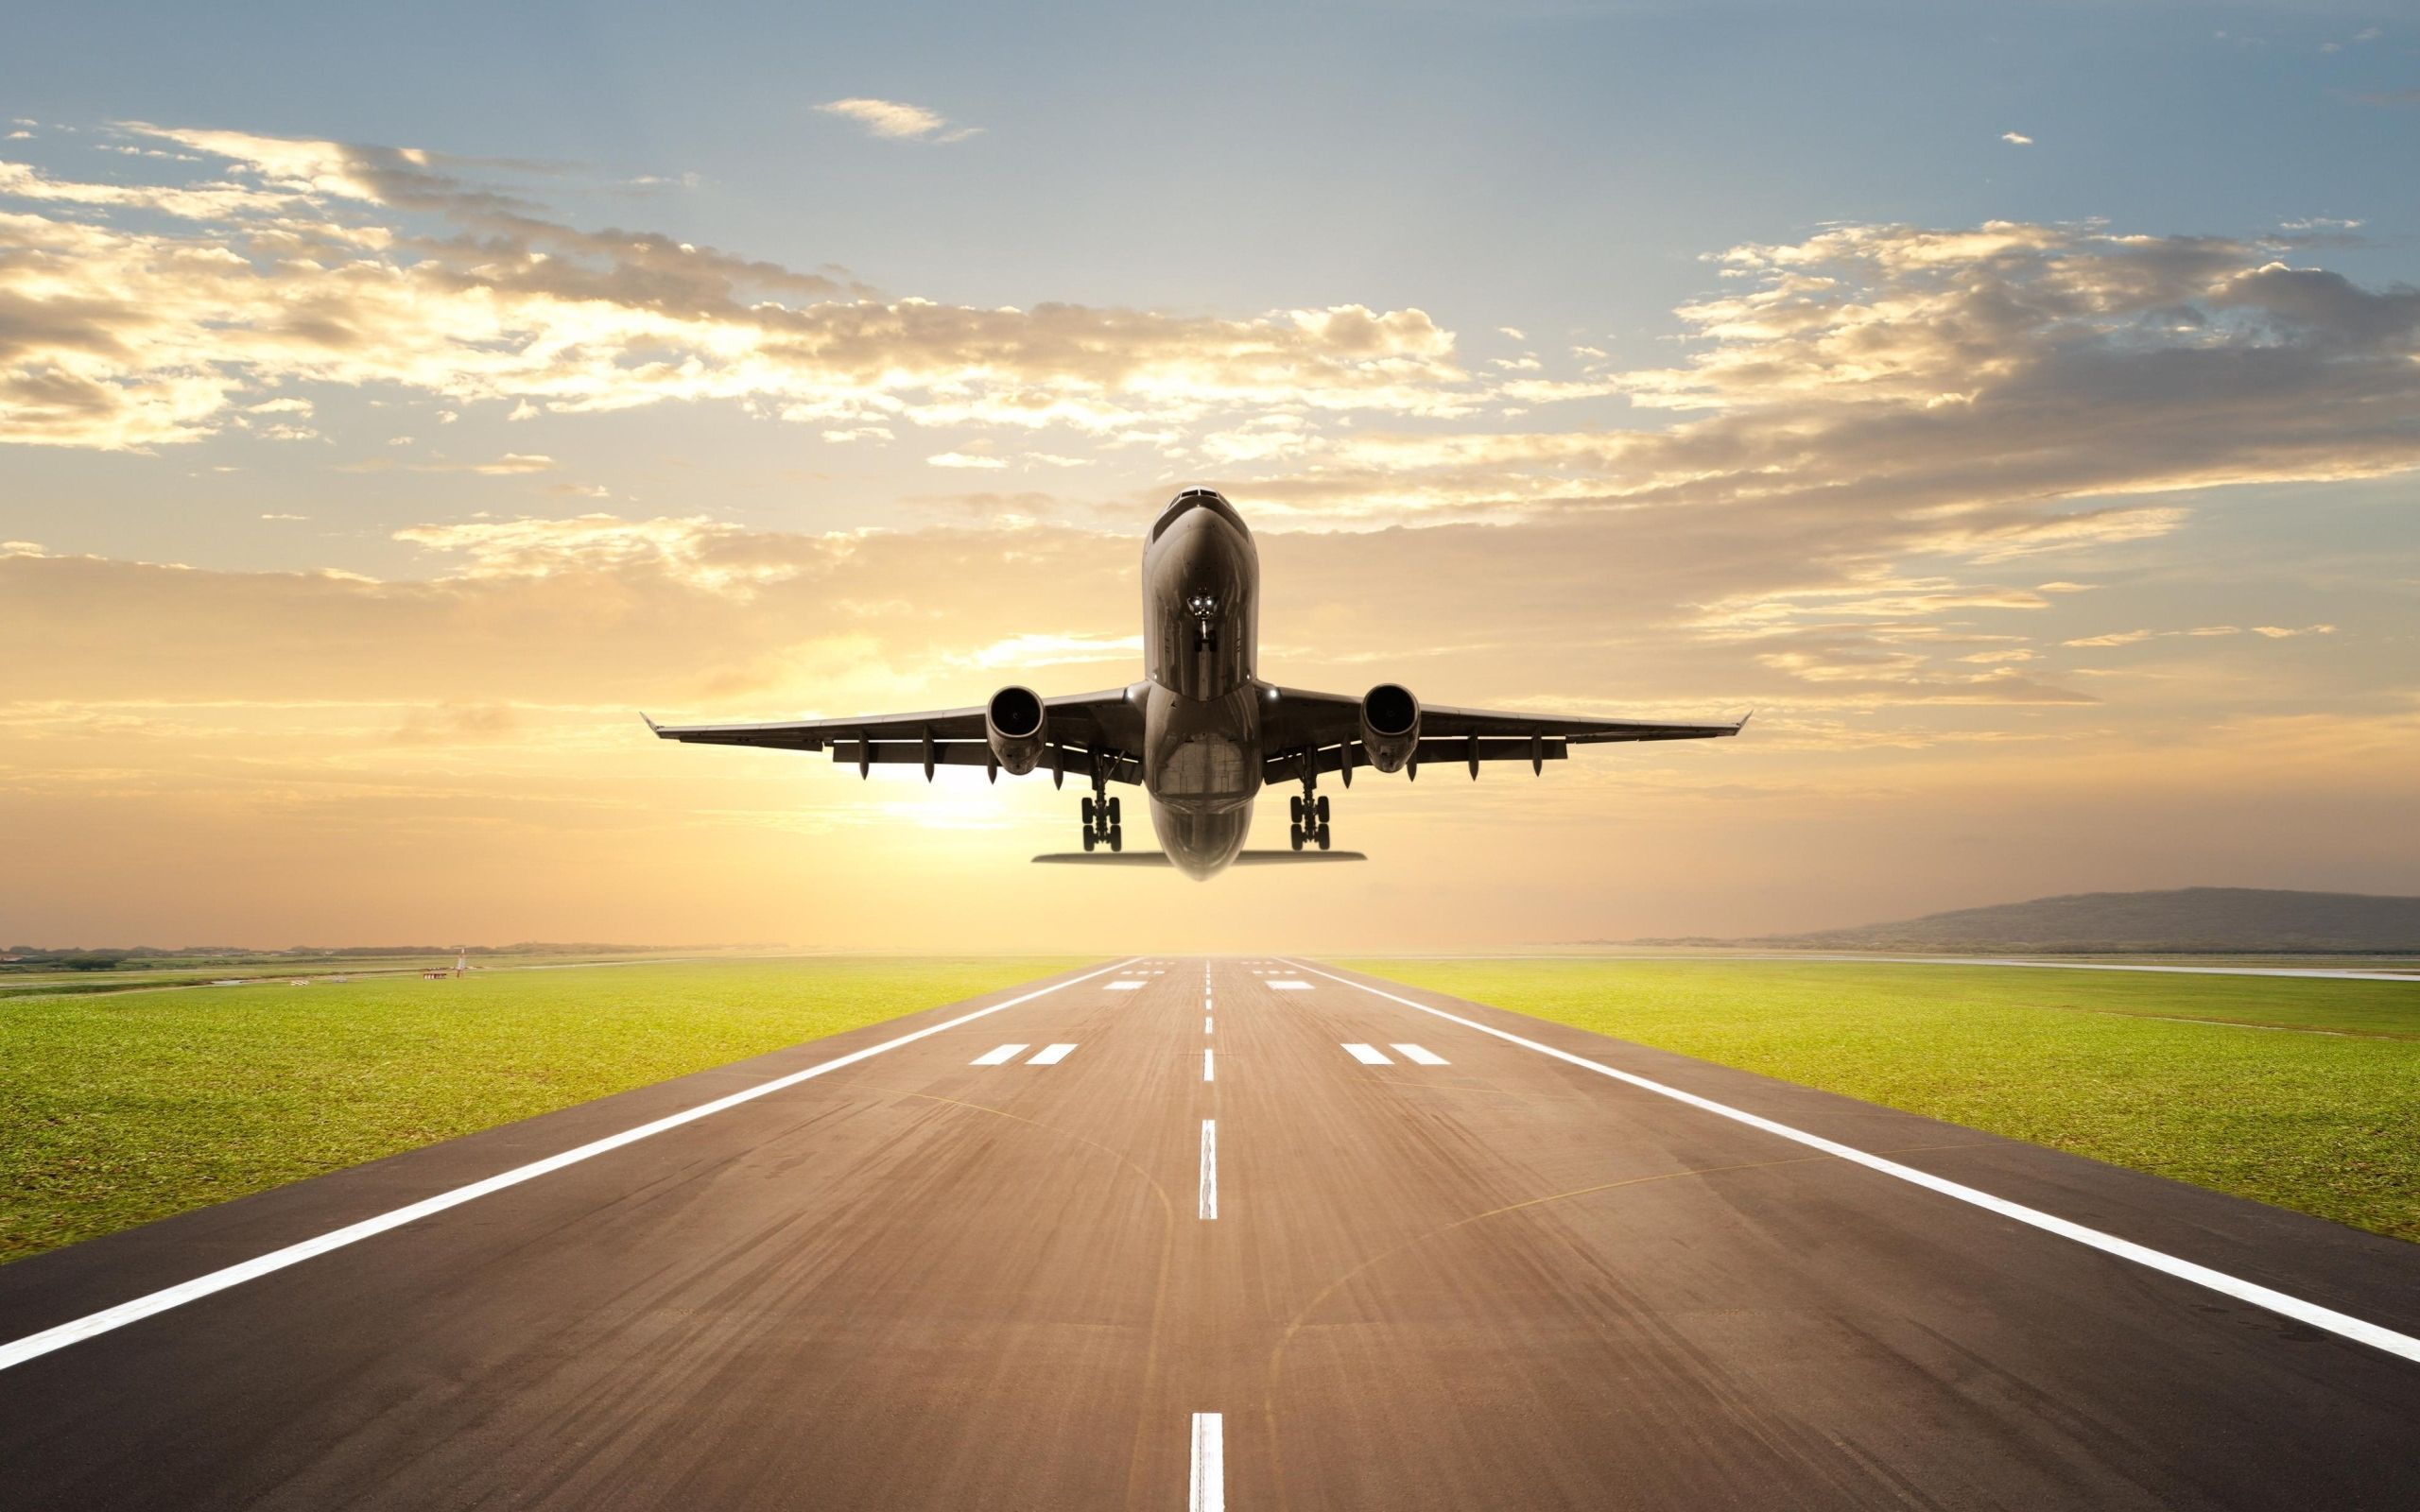 Aeroporto Internacional Marechal Rondon prevê voos internacionais em 2025